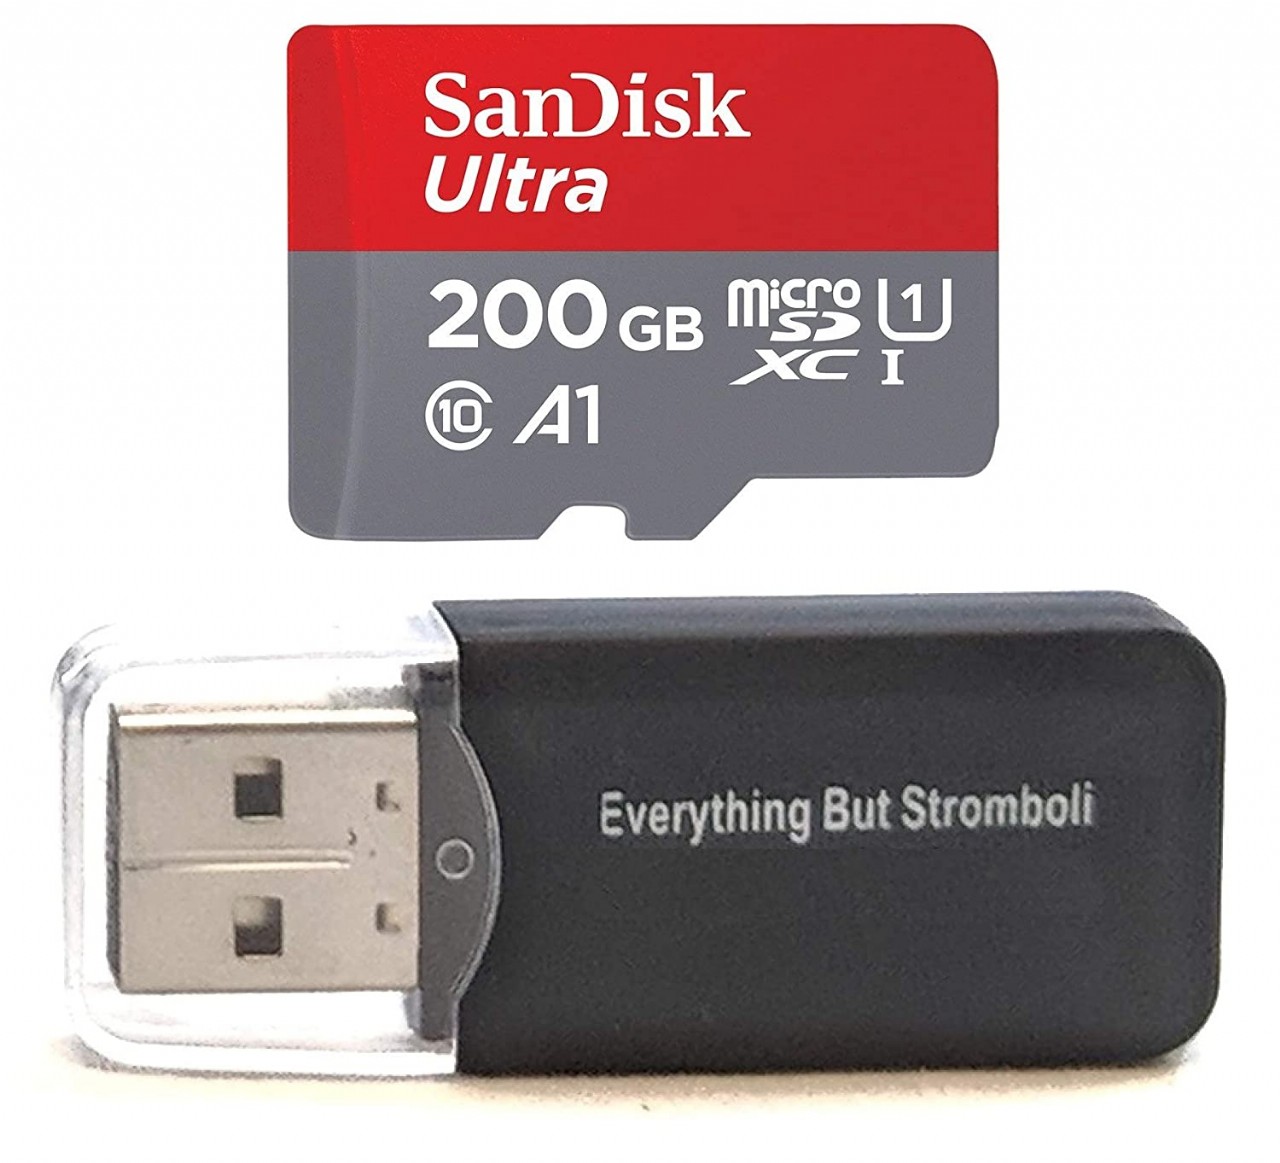 SanDisk 200GB Ultra Micro SDXC Memory Card Bundle Works with Samsung Galaxy A6, A6+, A8, A8 Star